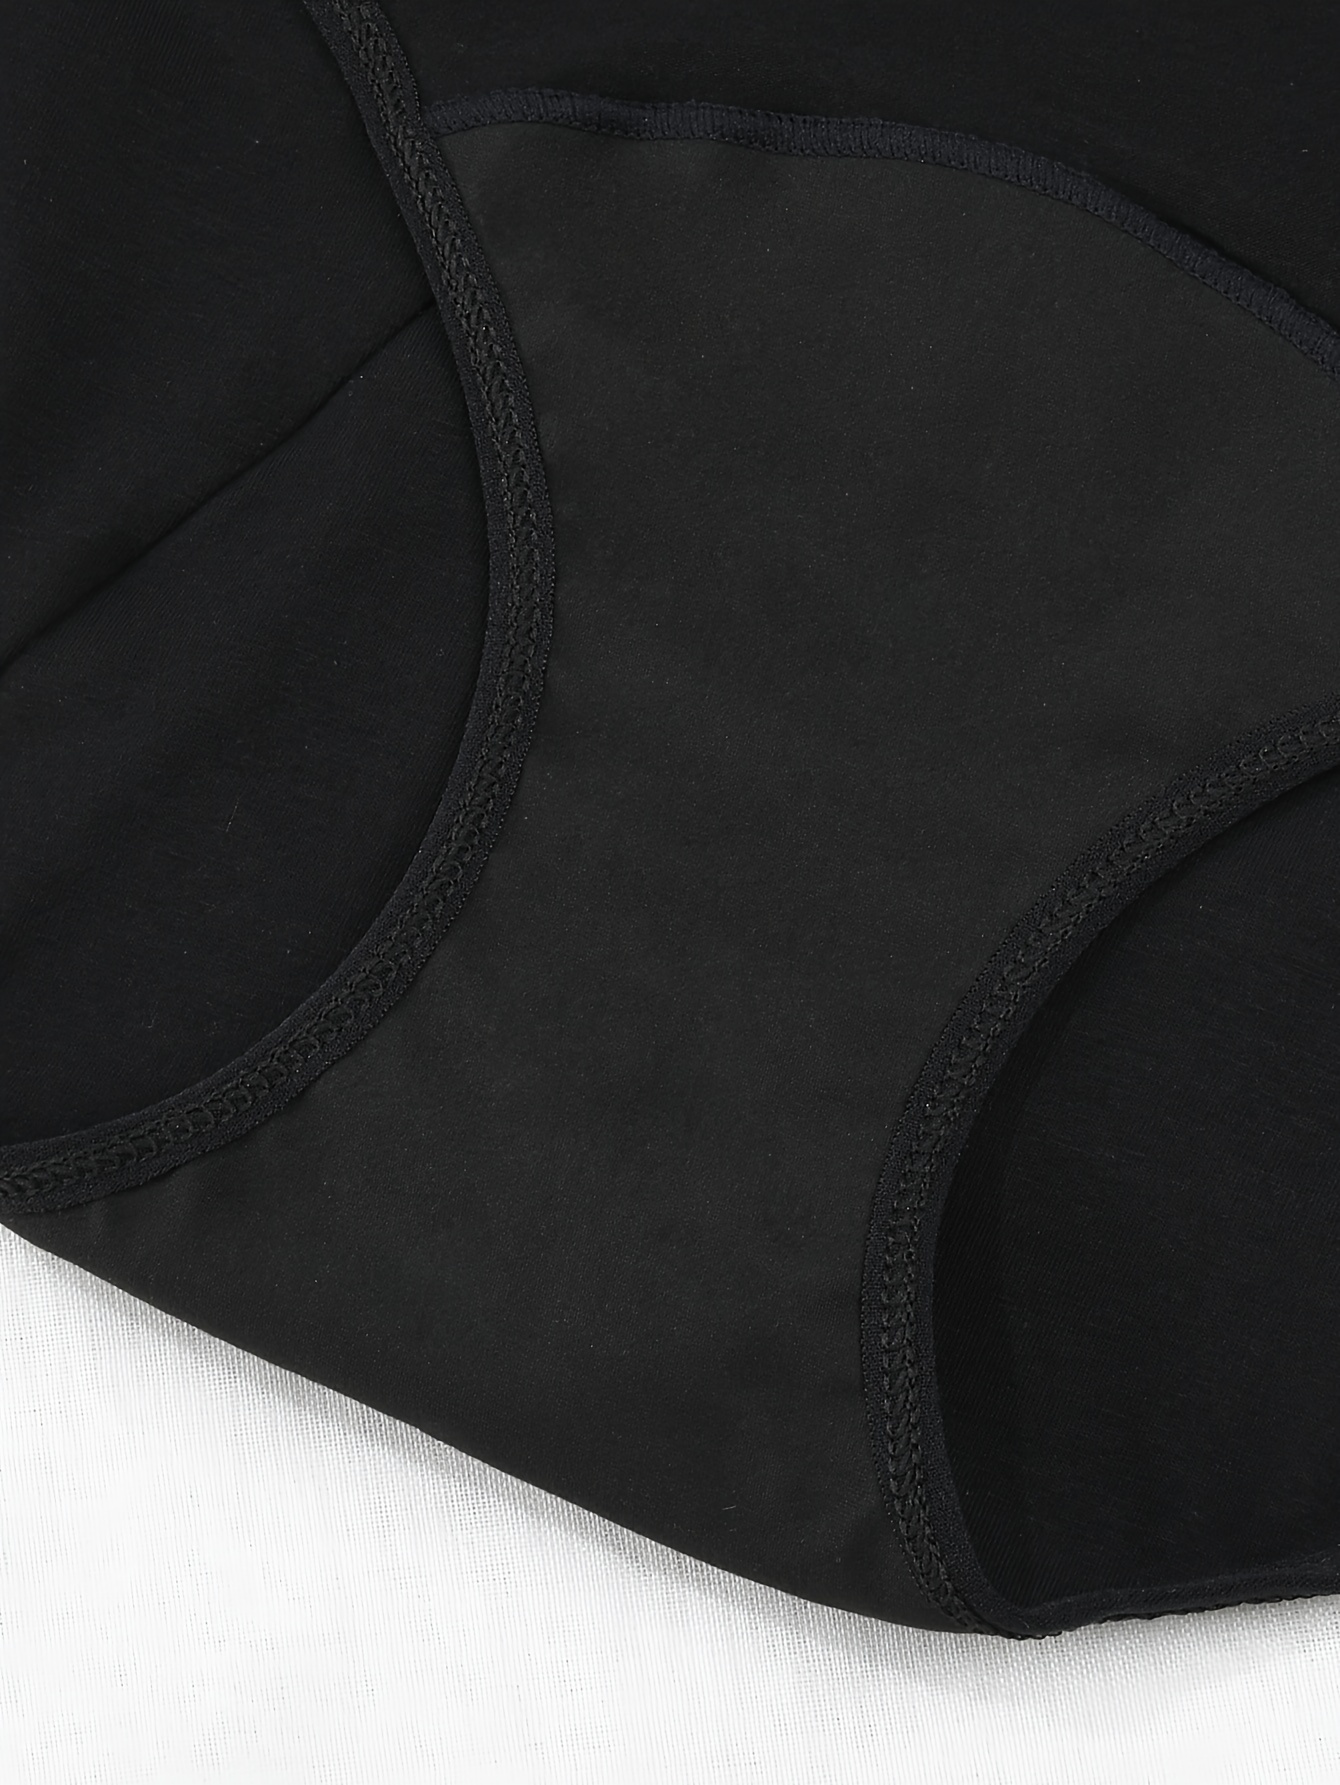 Vividmoo 8PACK Stretchy Cotton Leak-proof Panties Underwear for